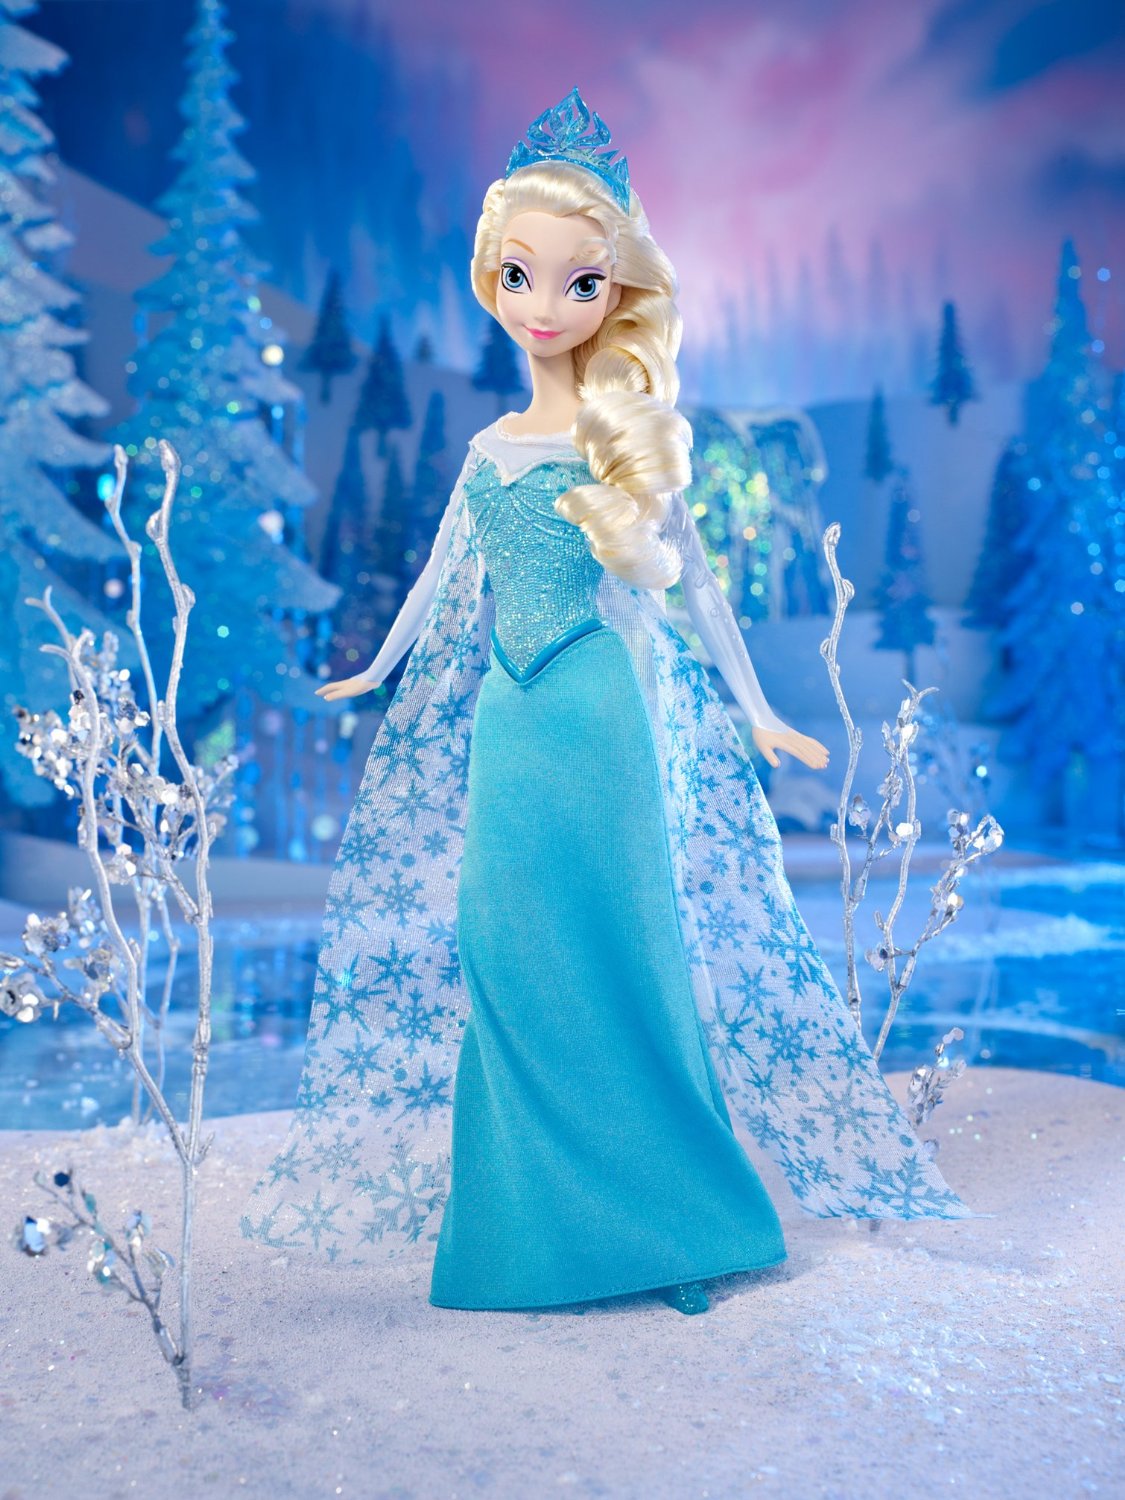 Disney Frozen Princess Elsa Doll